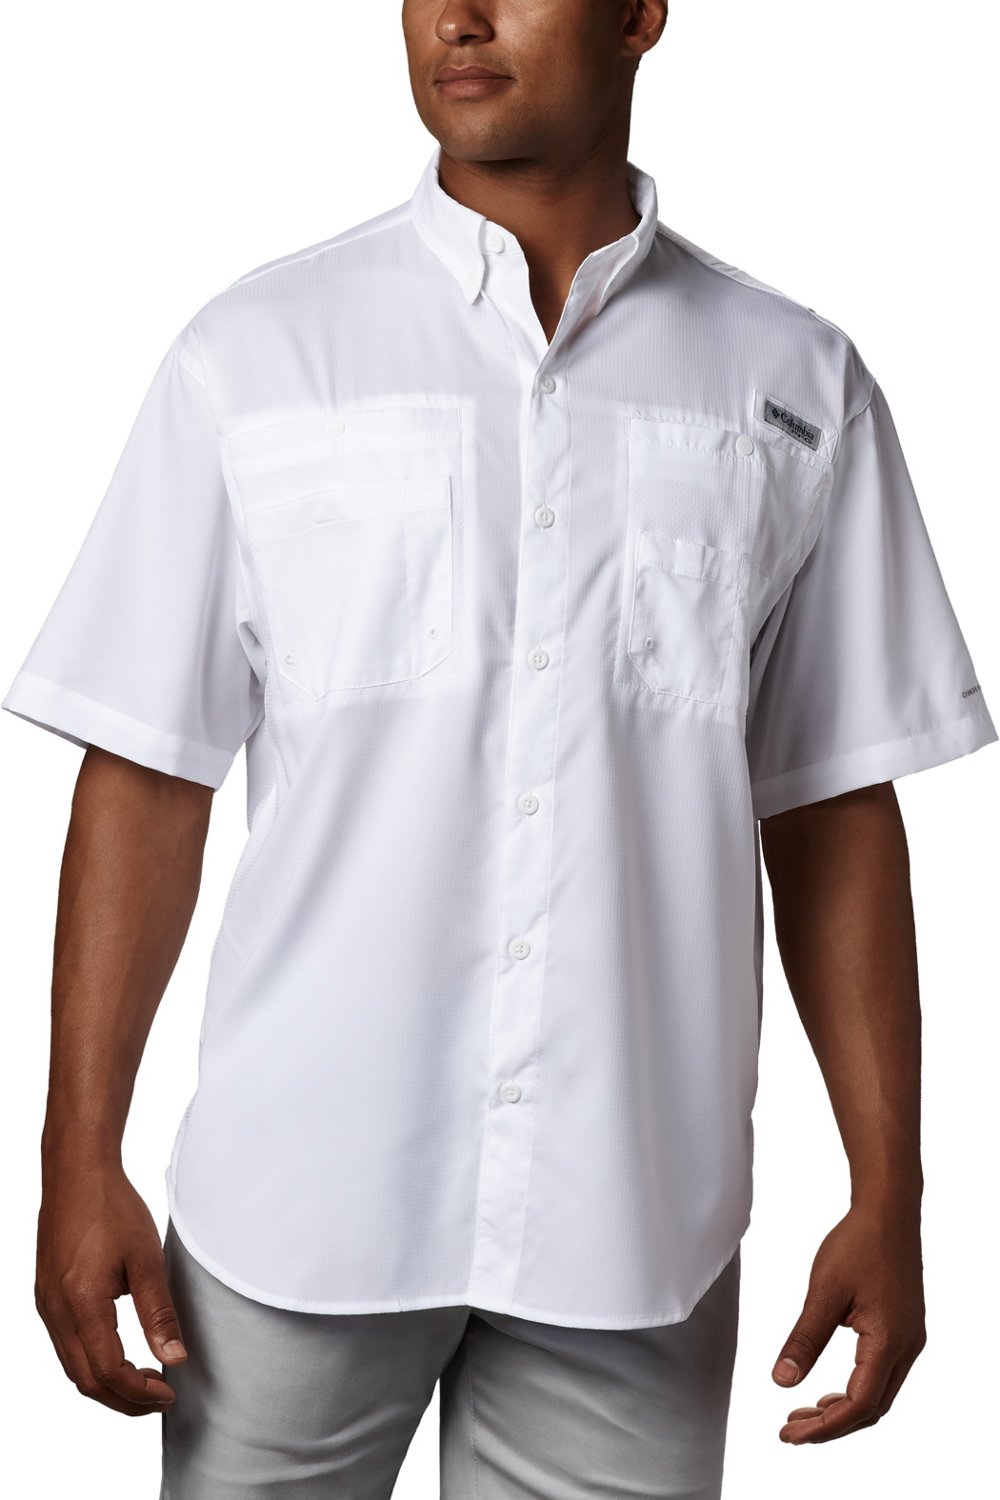 Columbia Sportswear Men's Tamiami II Shirt                                                                                       - view number 1 selected